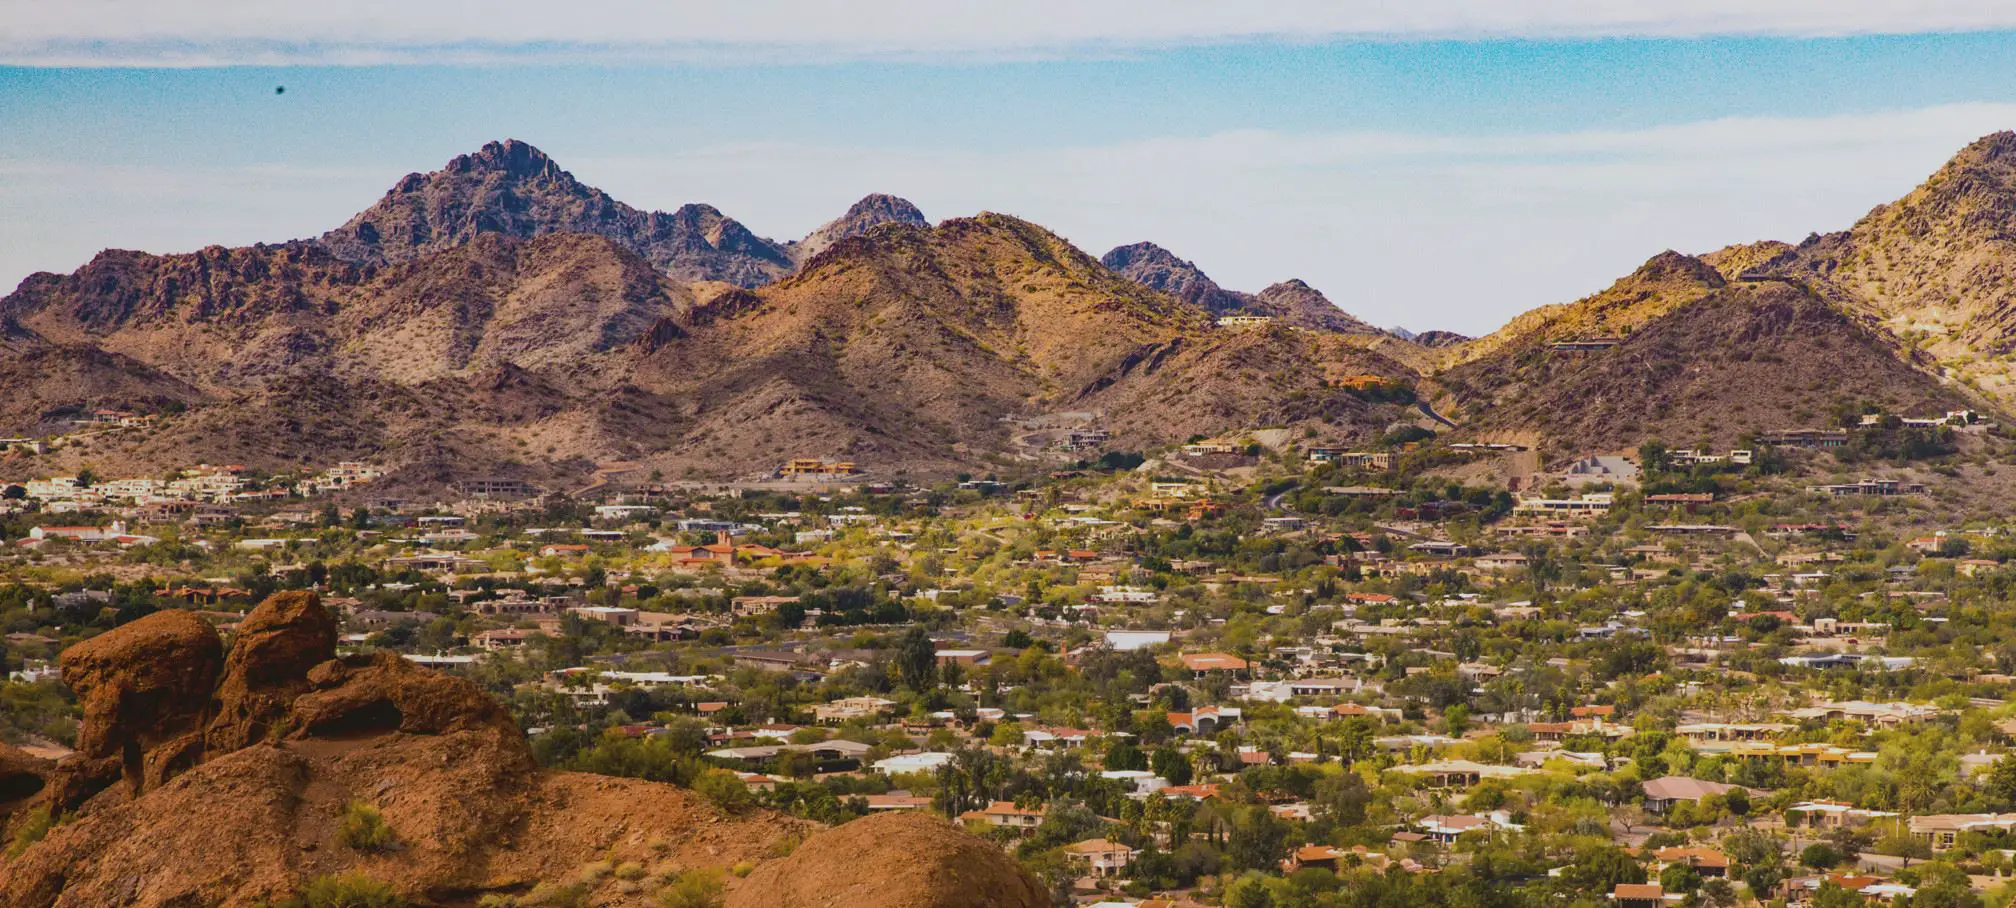 Phoenix Paradise Valley Urban Village: The Gem of the Southwest - Photo Source